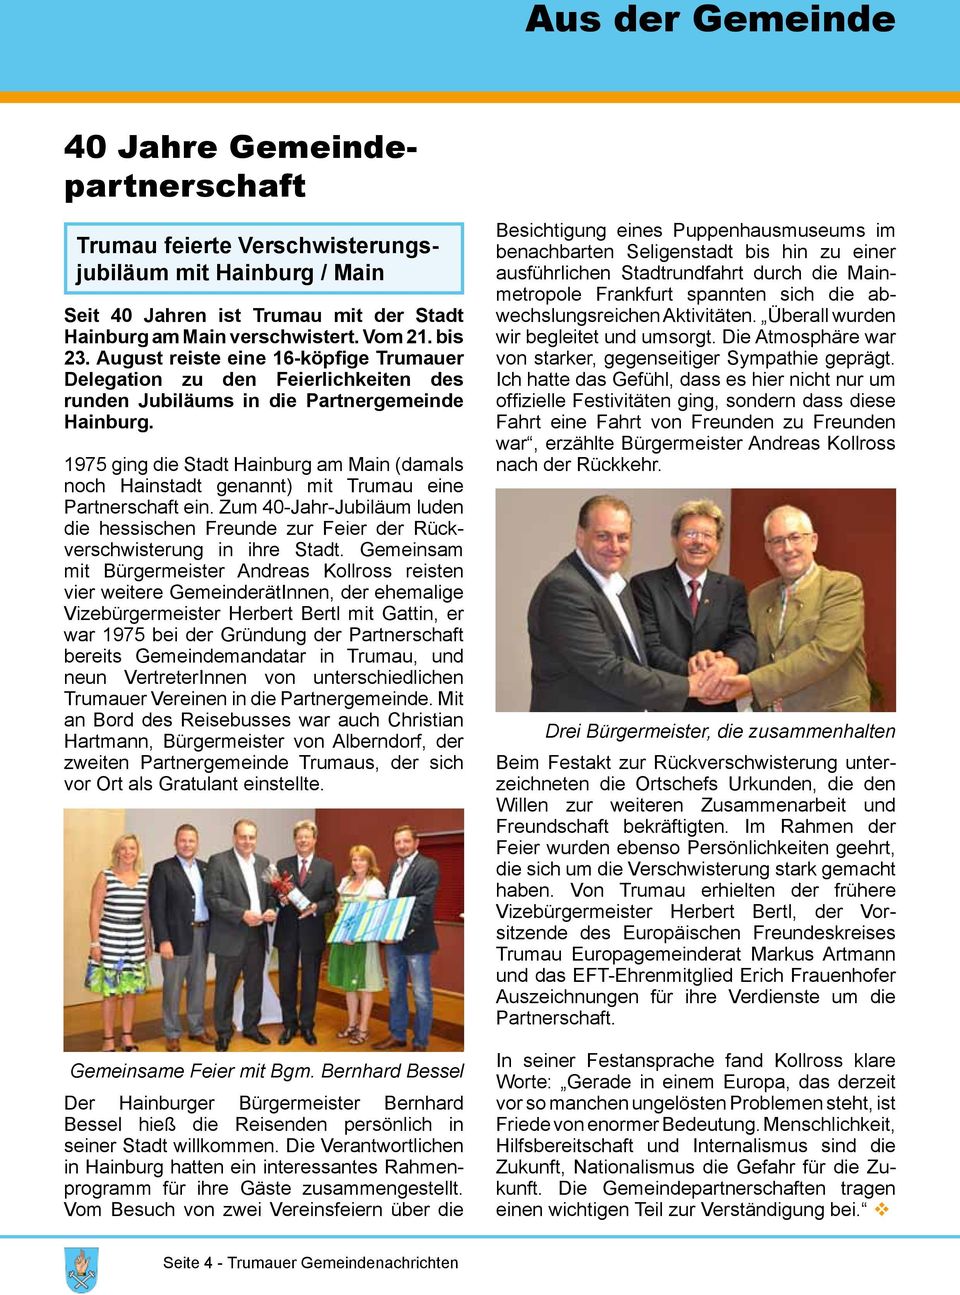 Bekanntschaften in Trumau - Partnersuche & Kontakte 